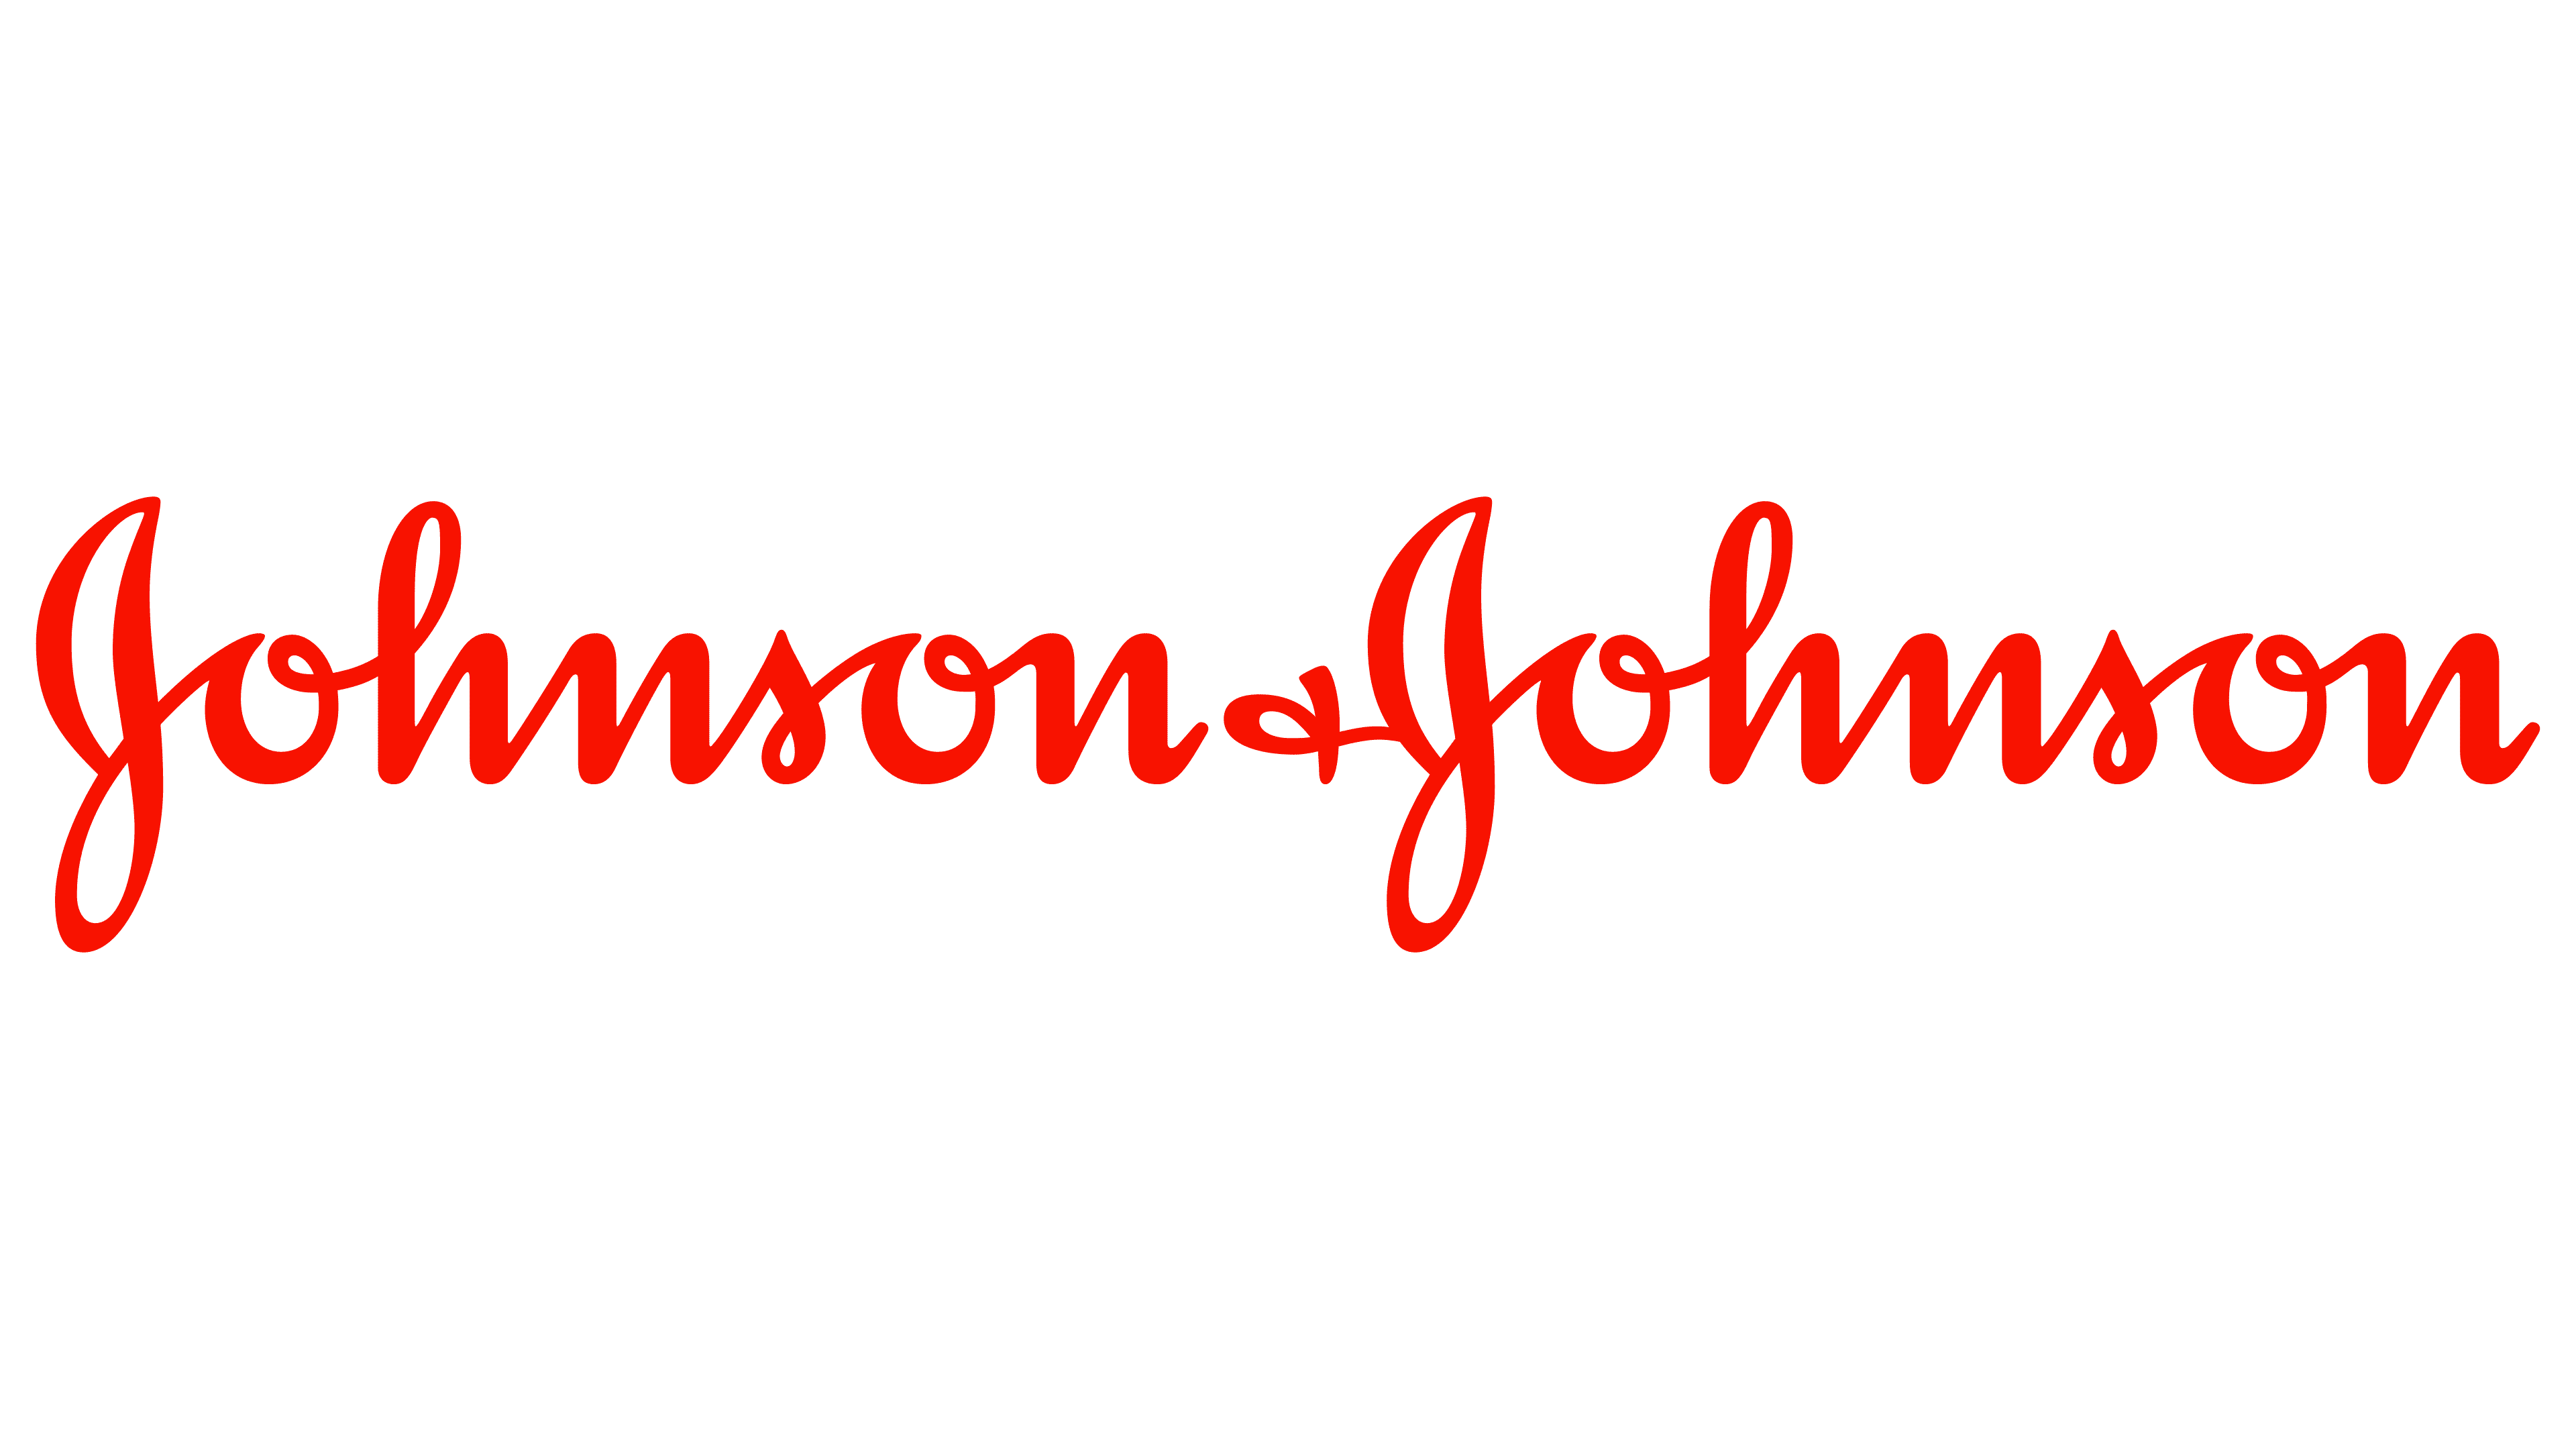 Johnson-Johnson-Logo.png